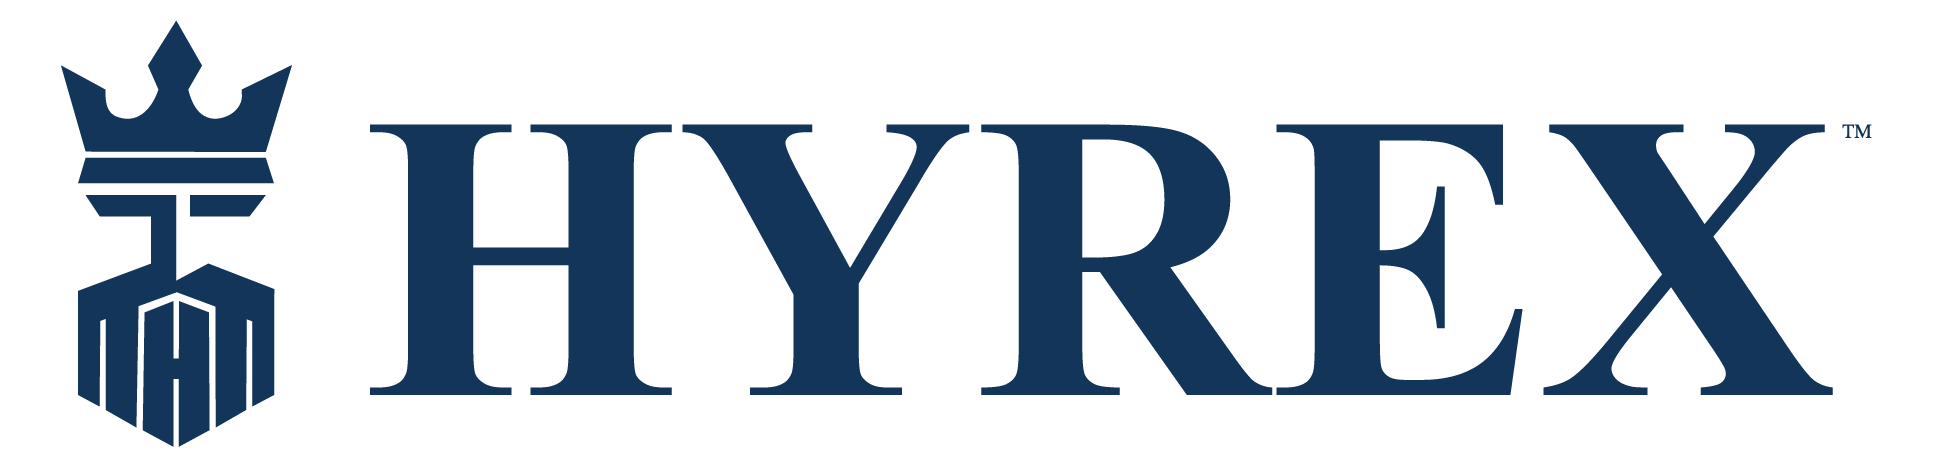 Hyrex Logo with King